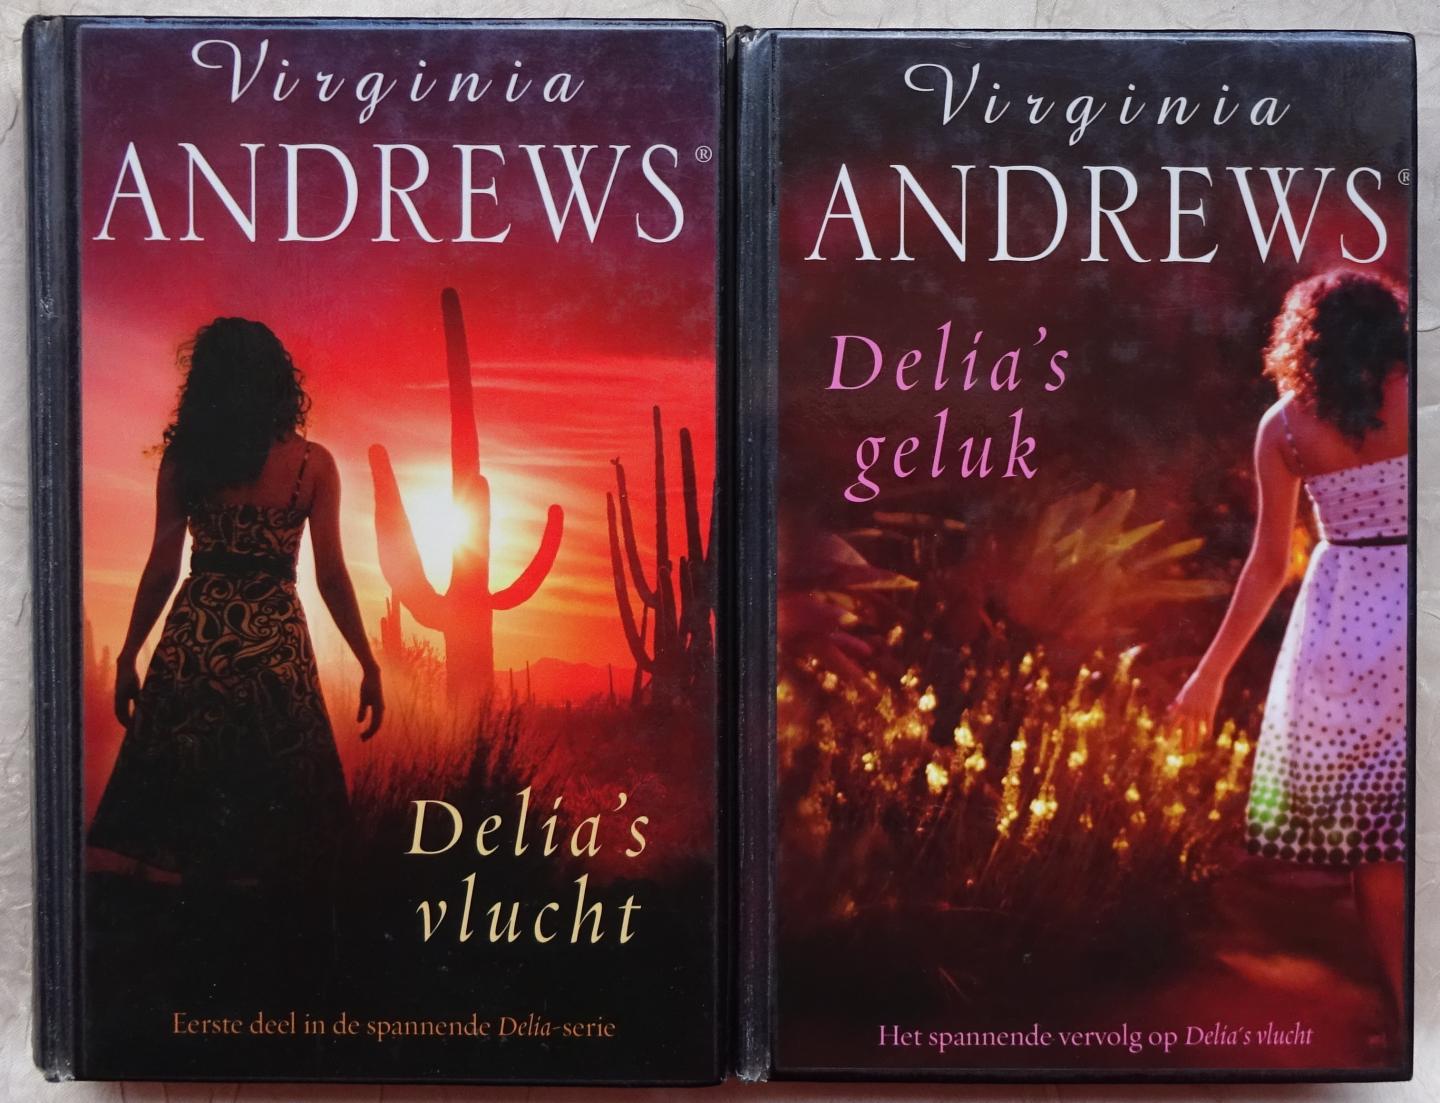 Andrews, Virginia - 2 delen Delia: 1. Delia's vlucht & 2. Delia's geluk [ isbn 9789032512033 & 9789032512040 ]